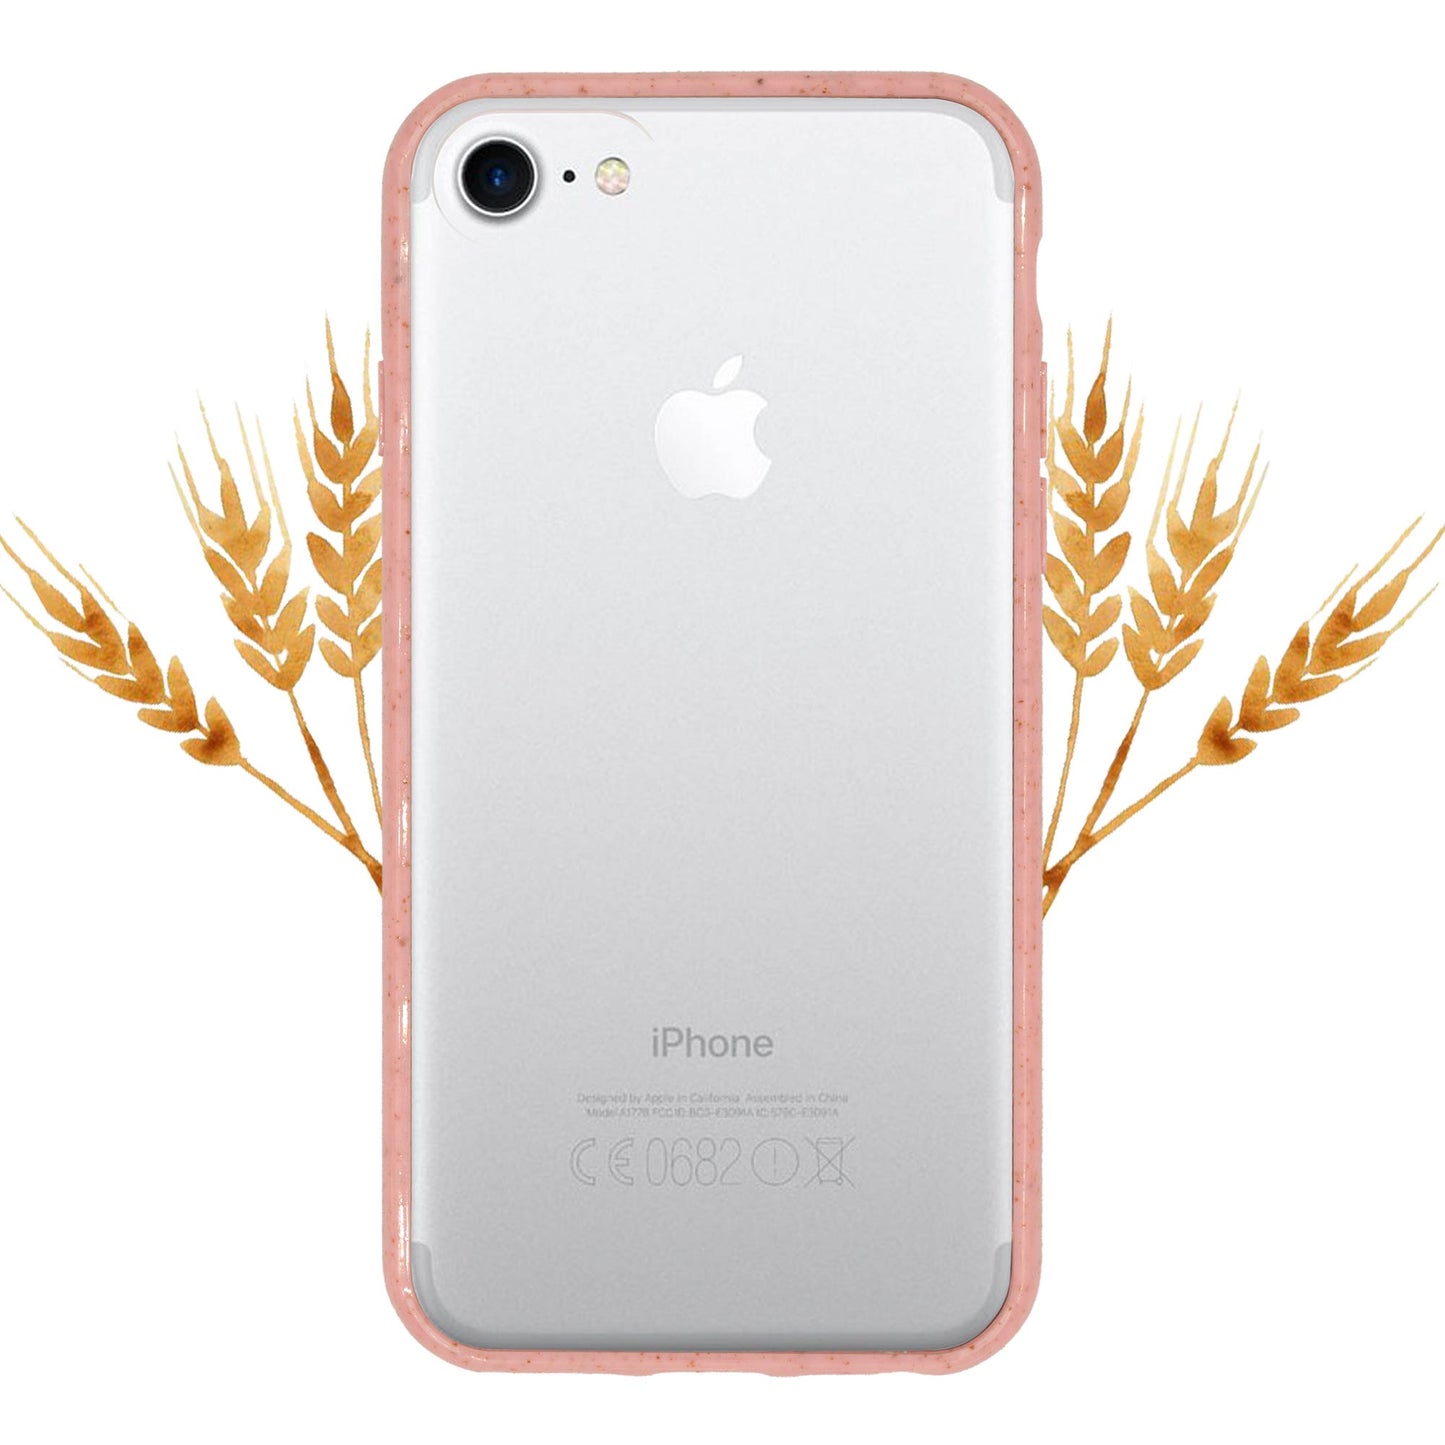 Biodegradable Phone Case - Transparent Pink